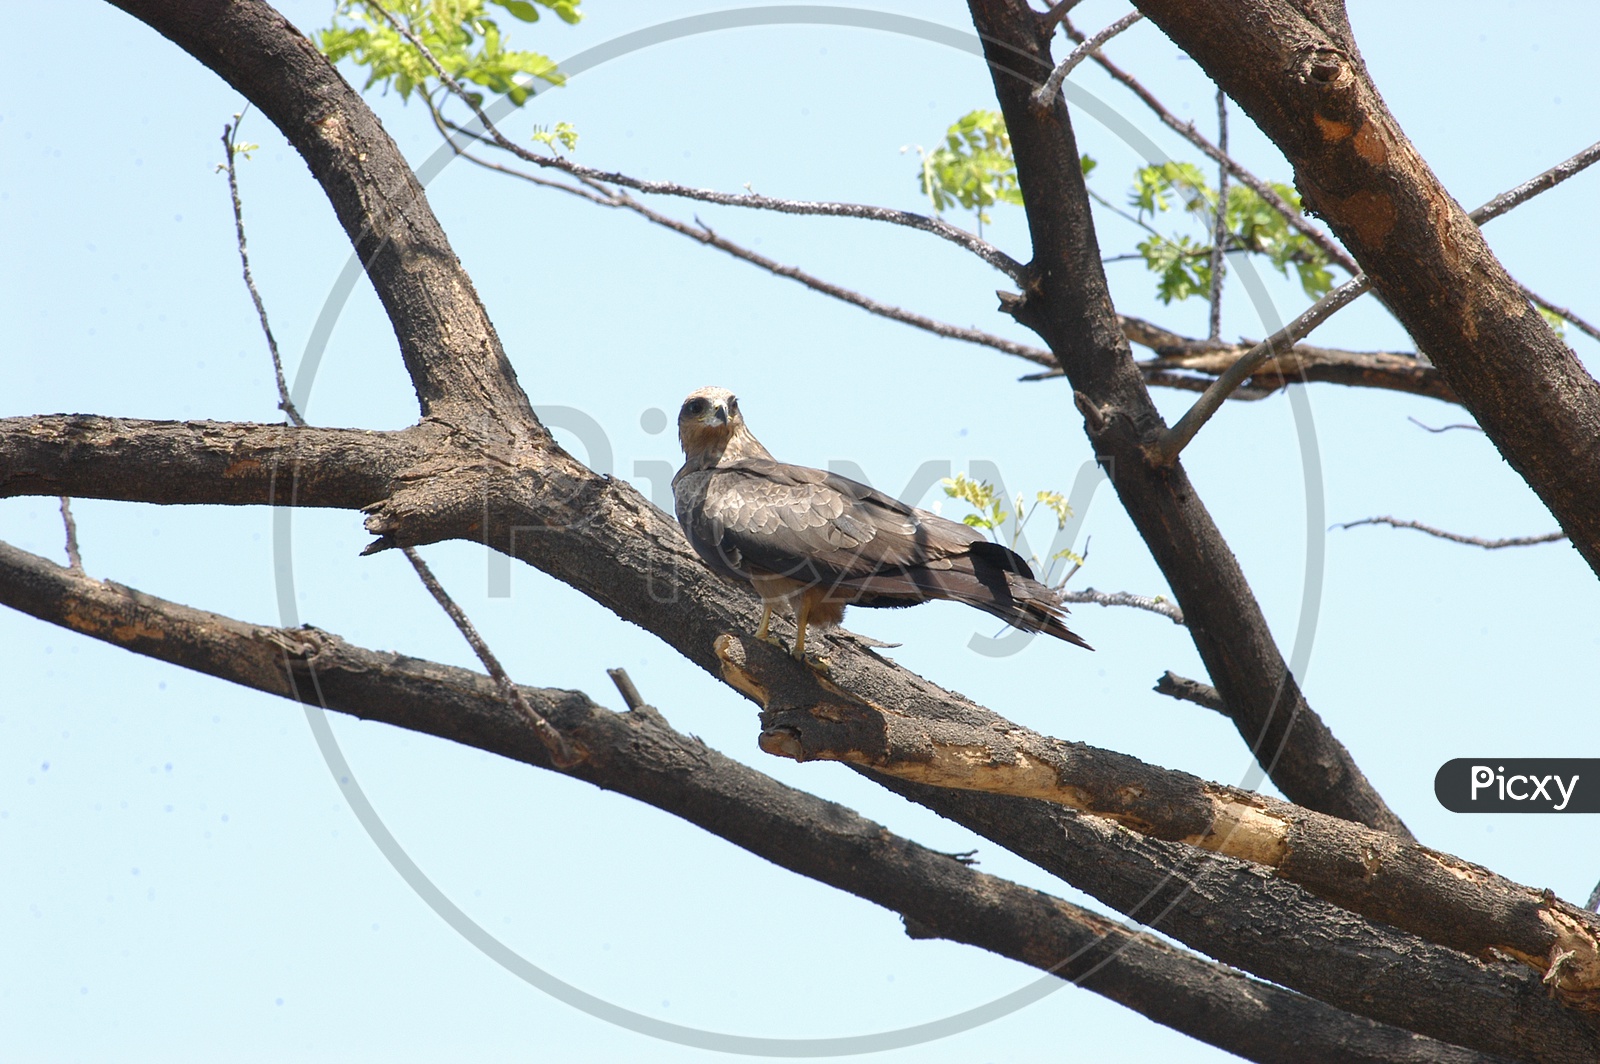 Buzzard on a tree branch